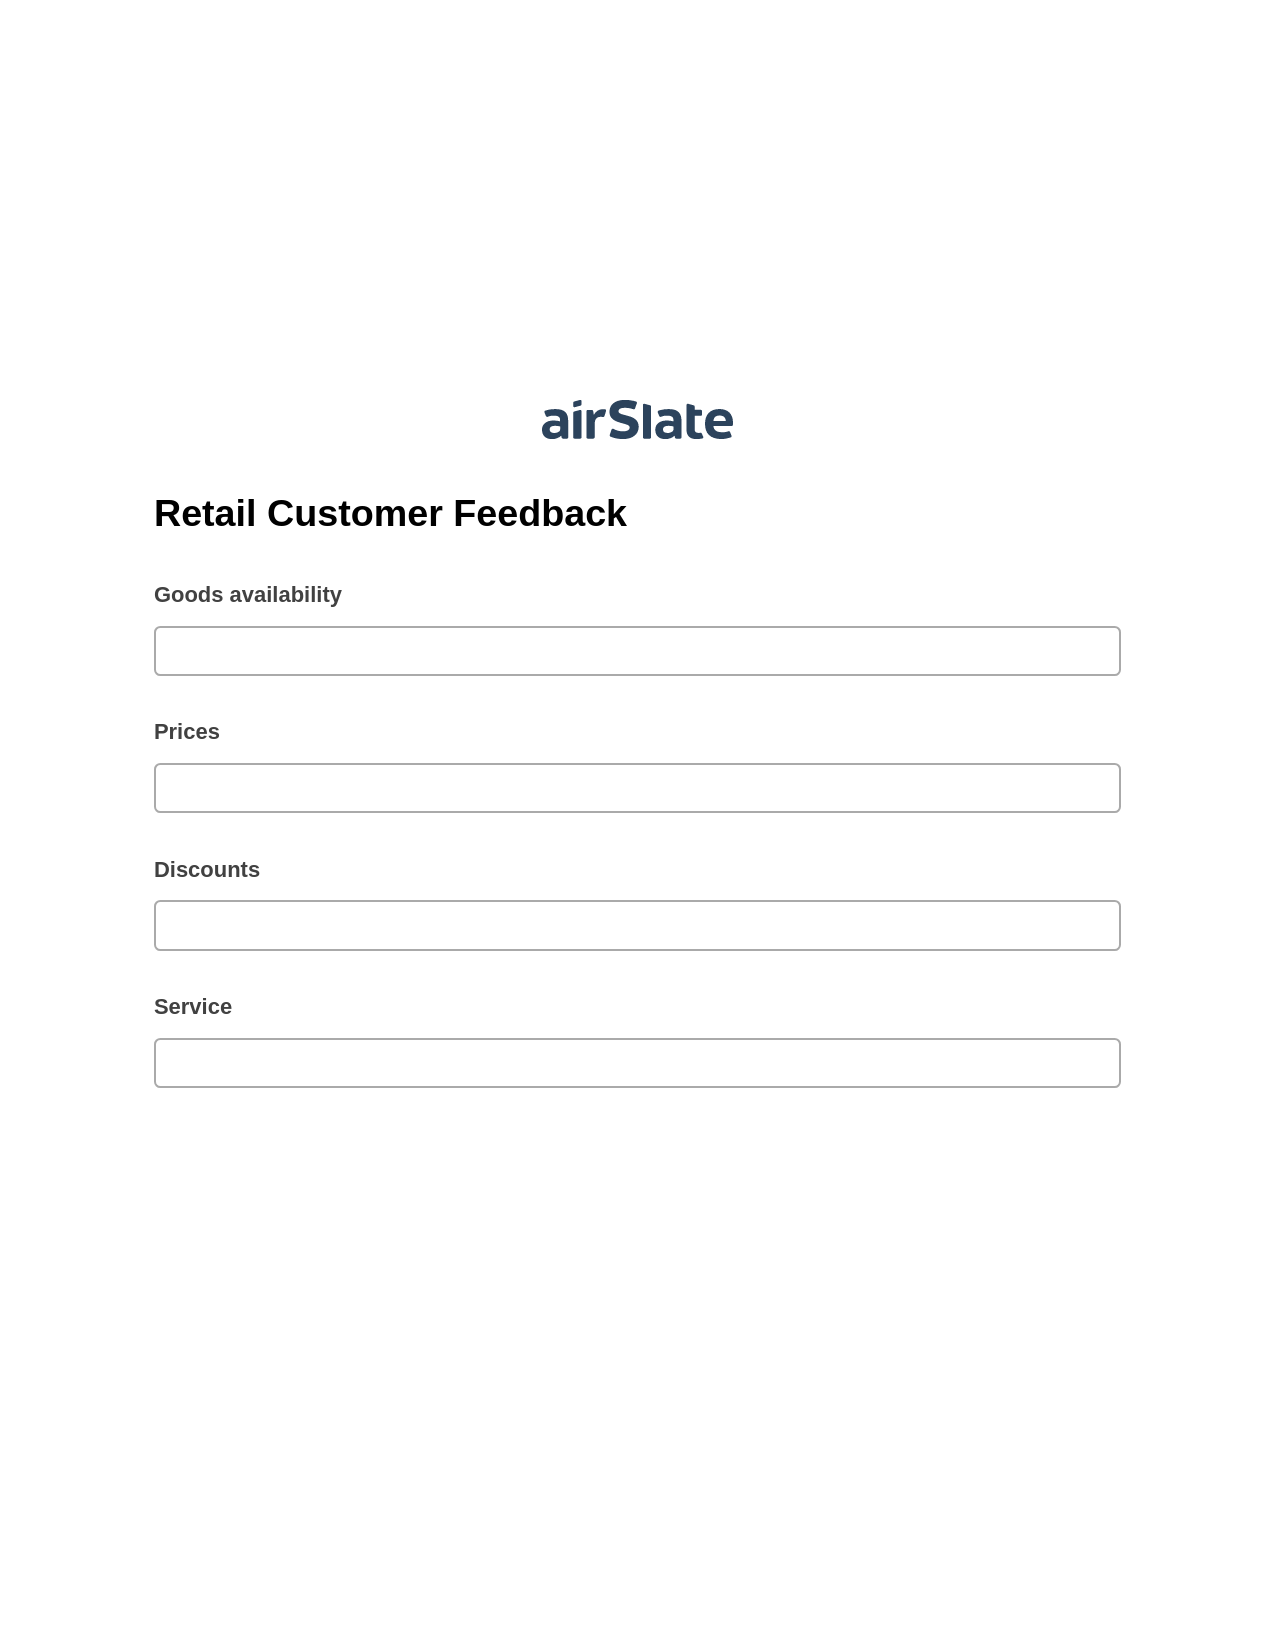 Retail Customer Feedback Pre-fill Slate from MS Dynamics 365 Records Bot, Google Sheet Two-Way Binding Bot, Export to Smartsheet